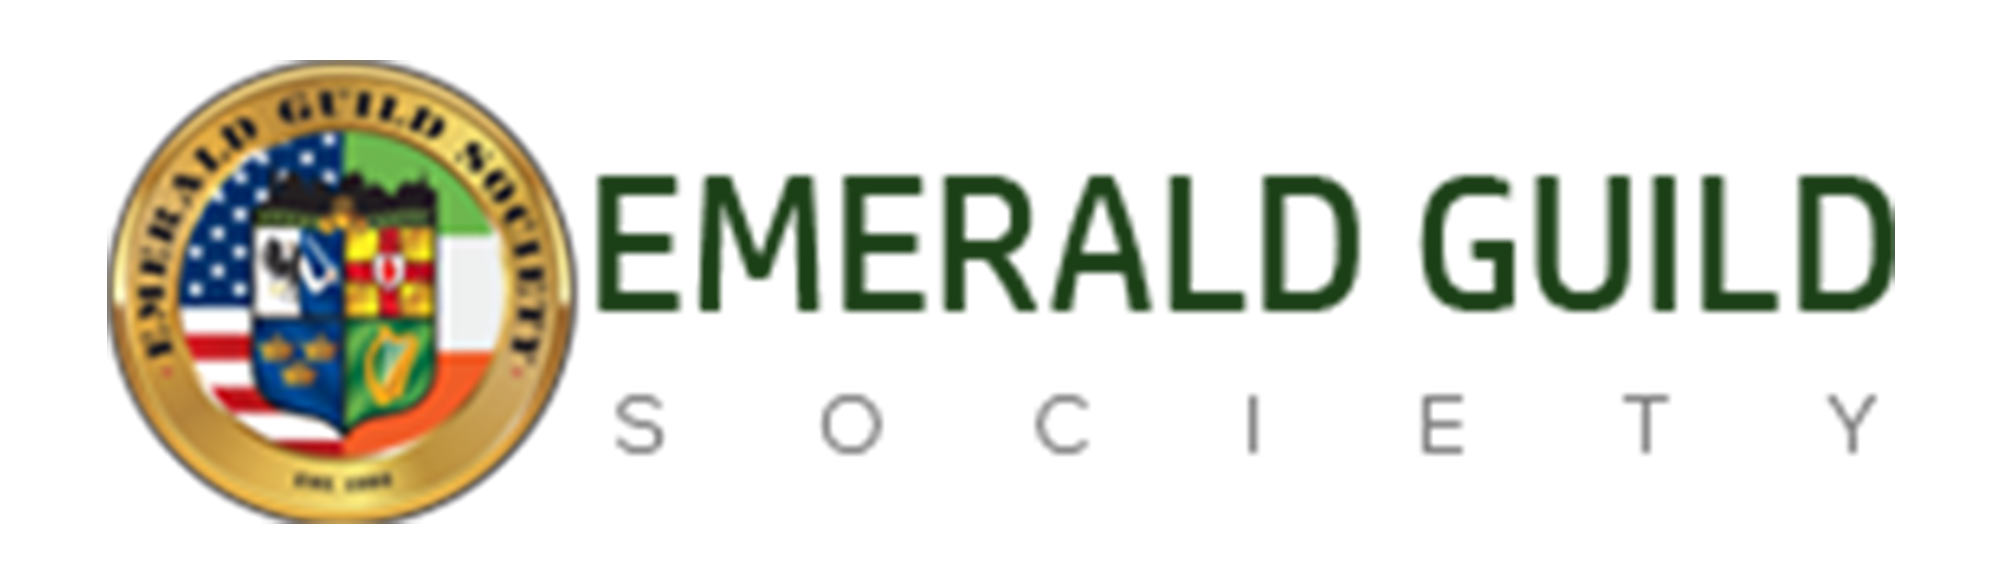 Emerald Guild Society